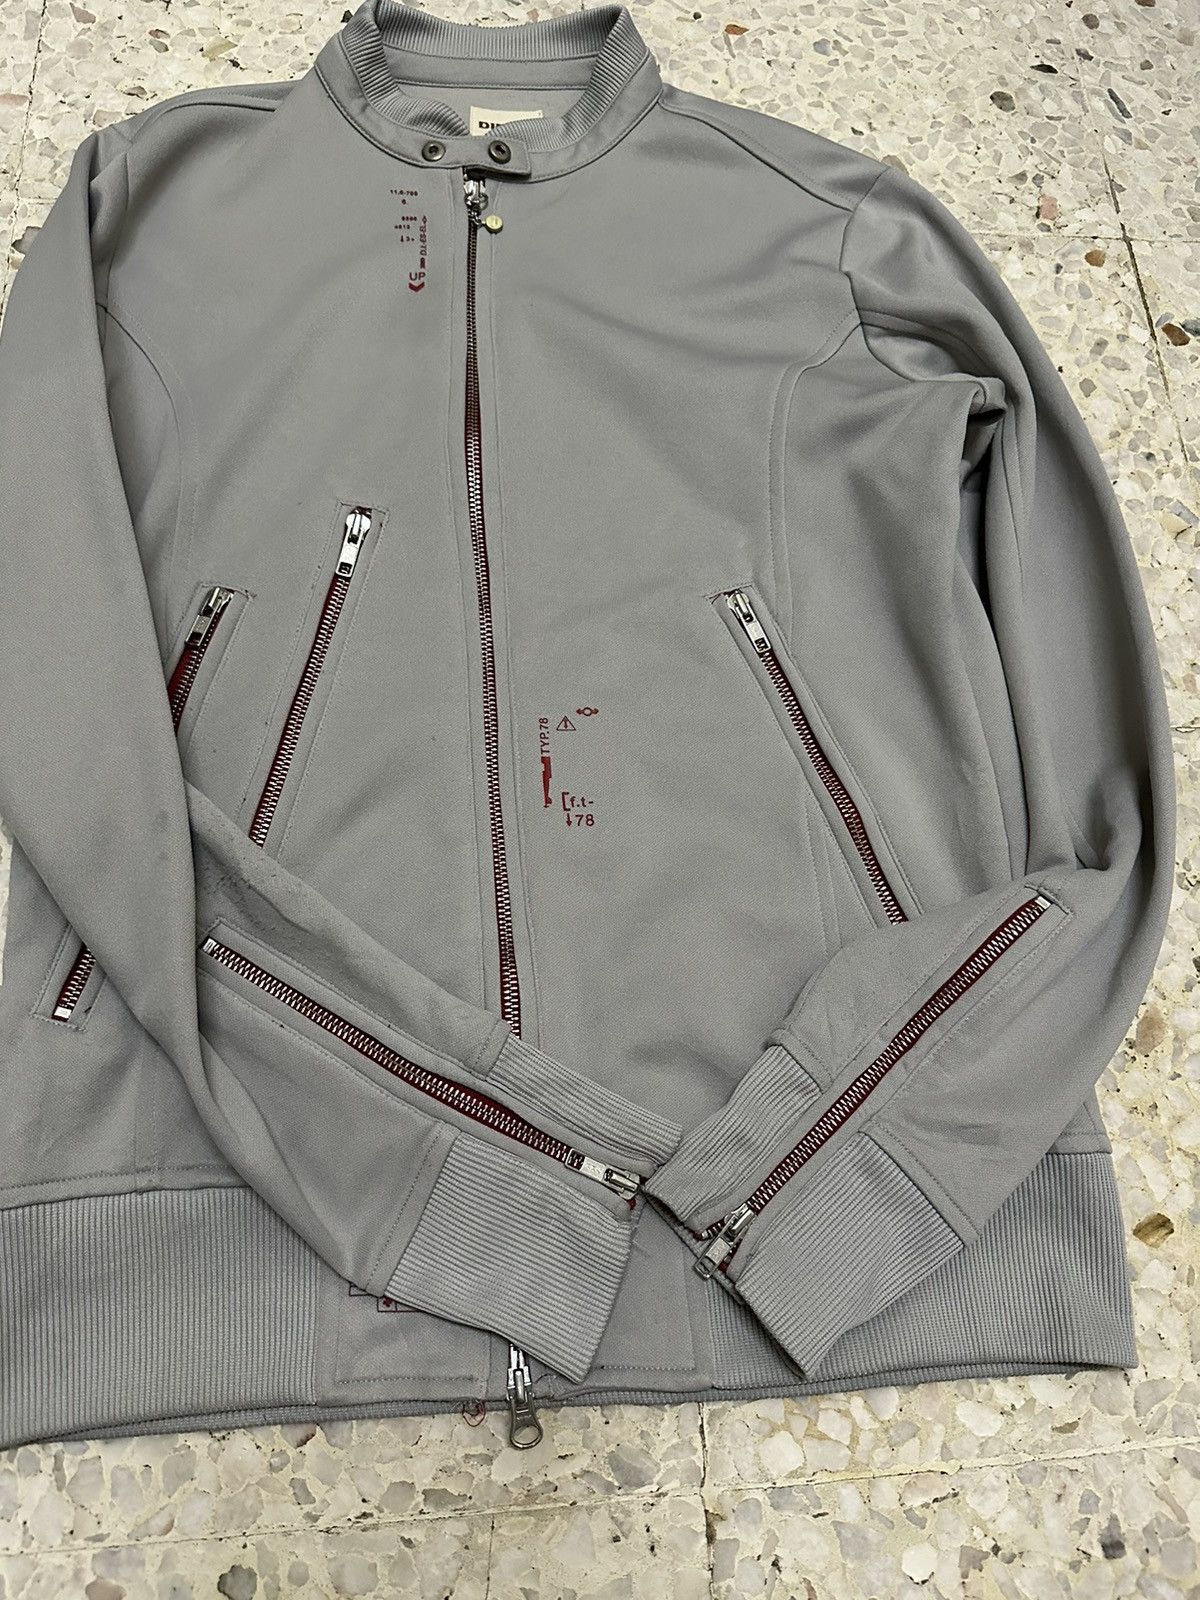 Diesel Jacket Sweater Zipper Design - 6